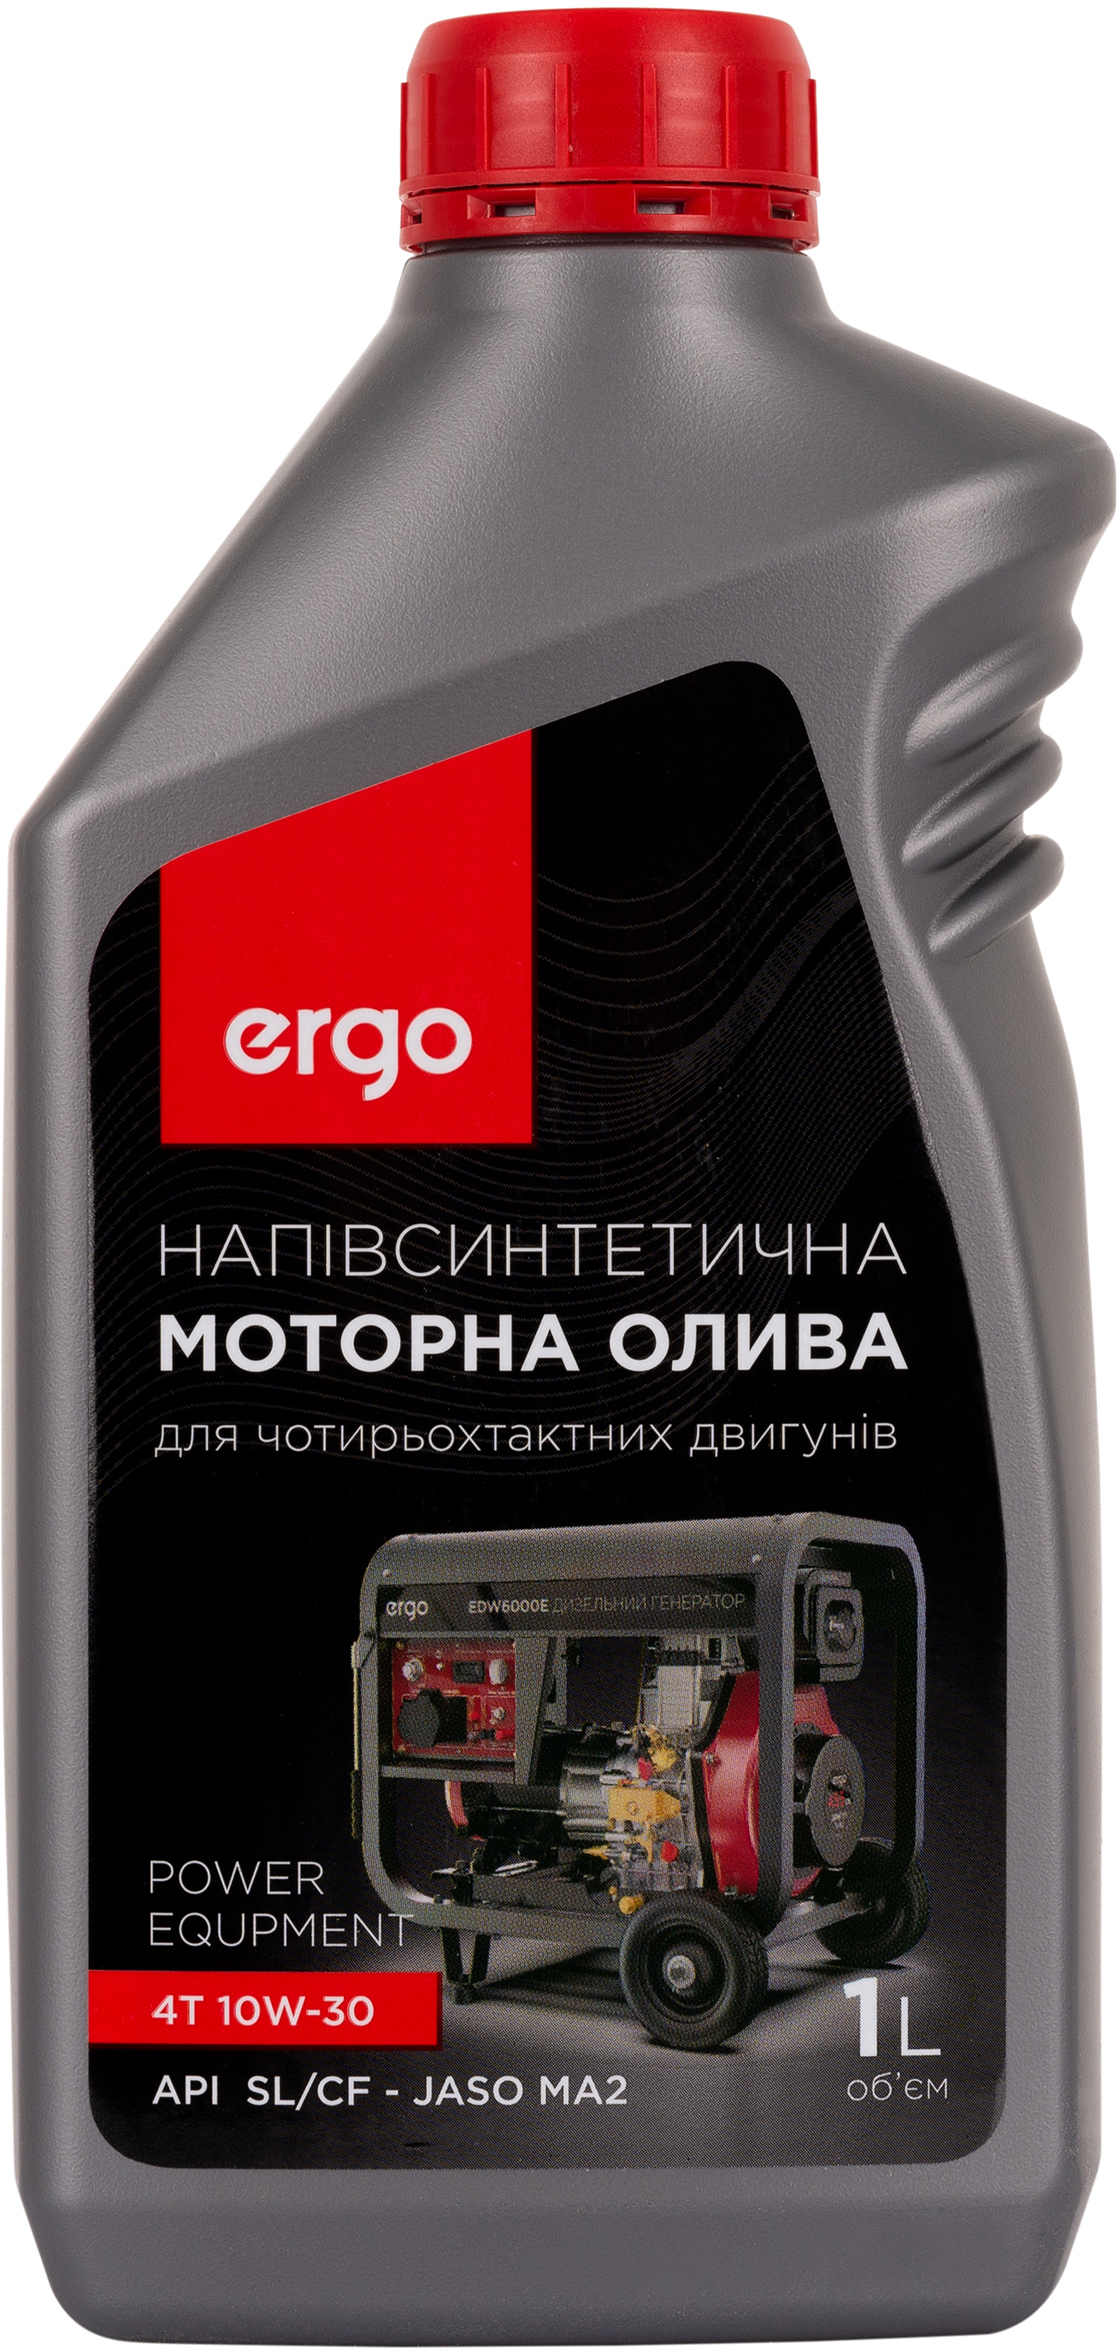 Цена моторное масло Ergo 10W-30, 1 л в Черкассах